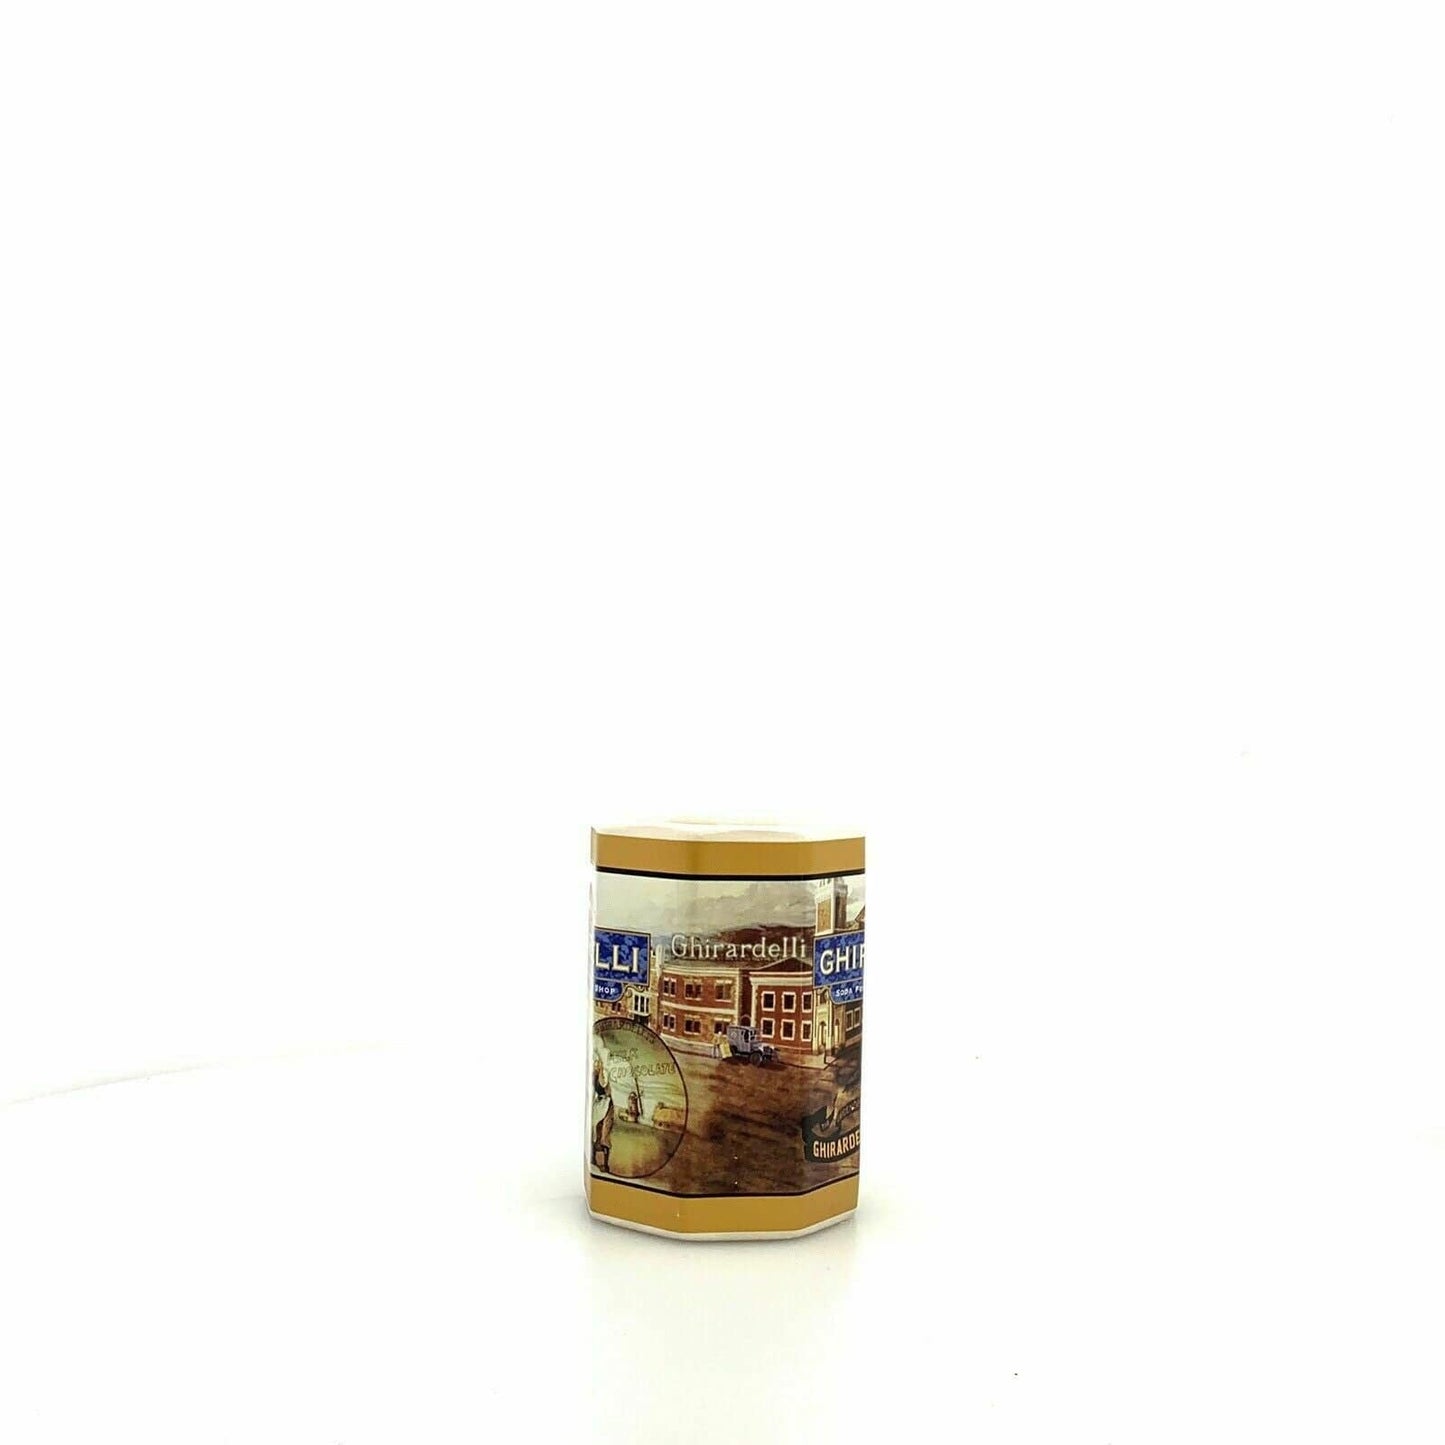 GHIRARDELLI Chocolate Company Collectible Ceramic Octagonal Coffee Mug Cup